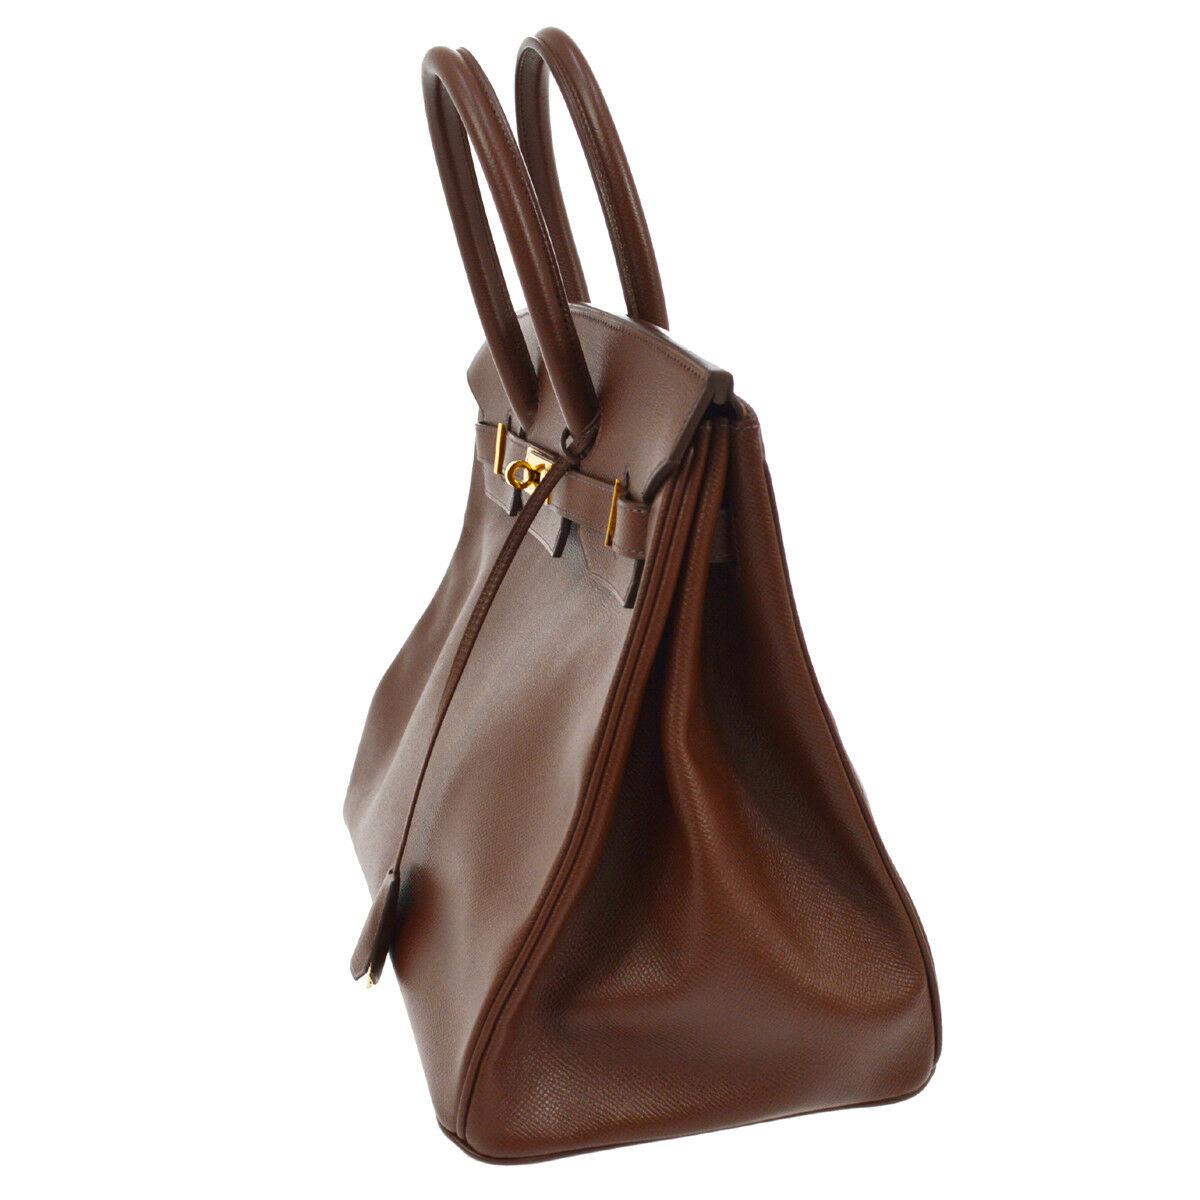 Hermes Birkin 35 Brown Leather Gold Top Carryall Handle Satchel Travel Tote Bag 1